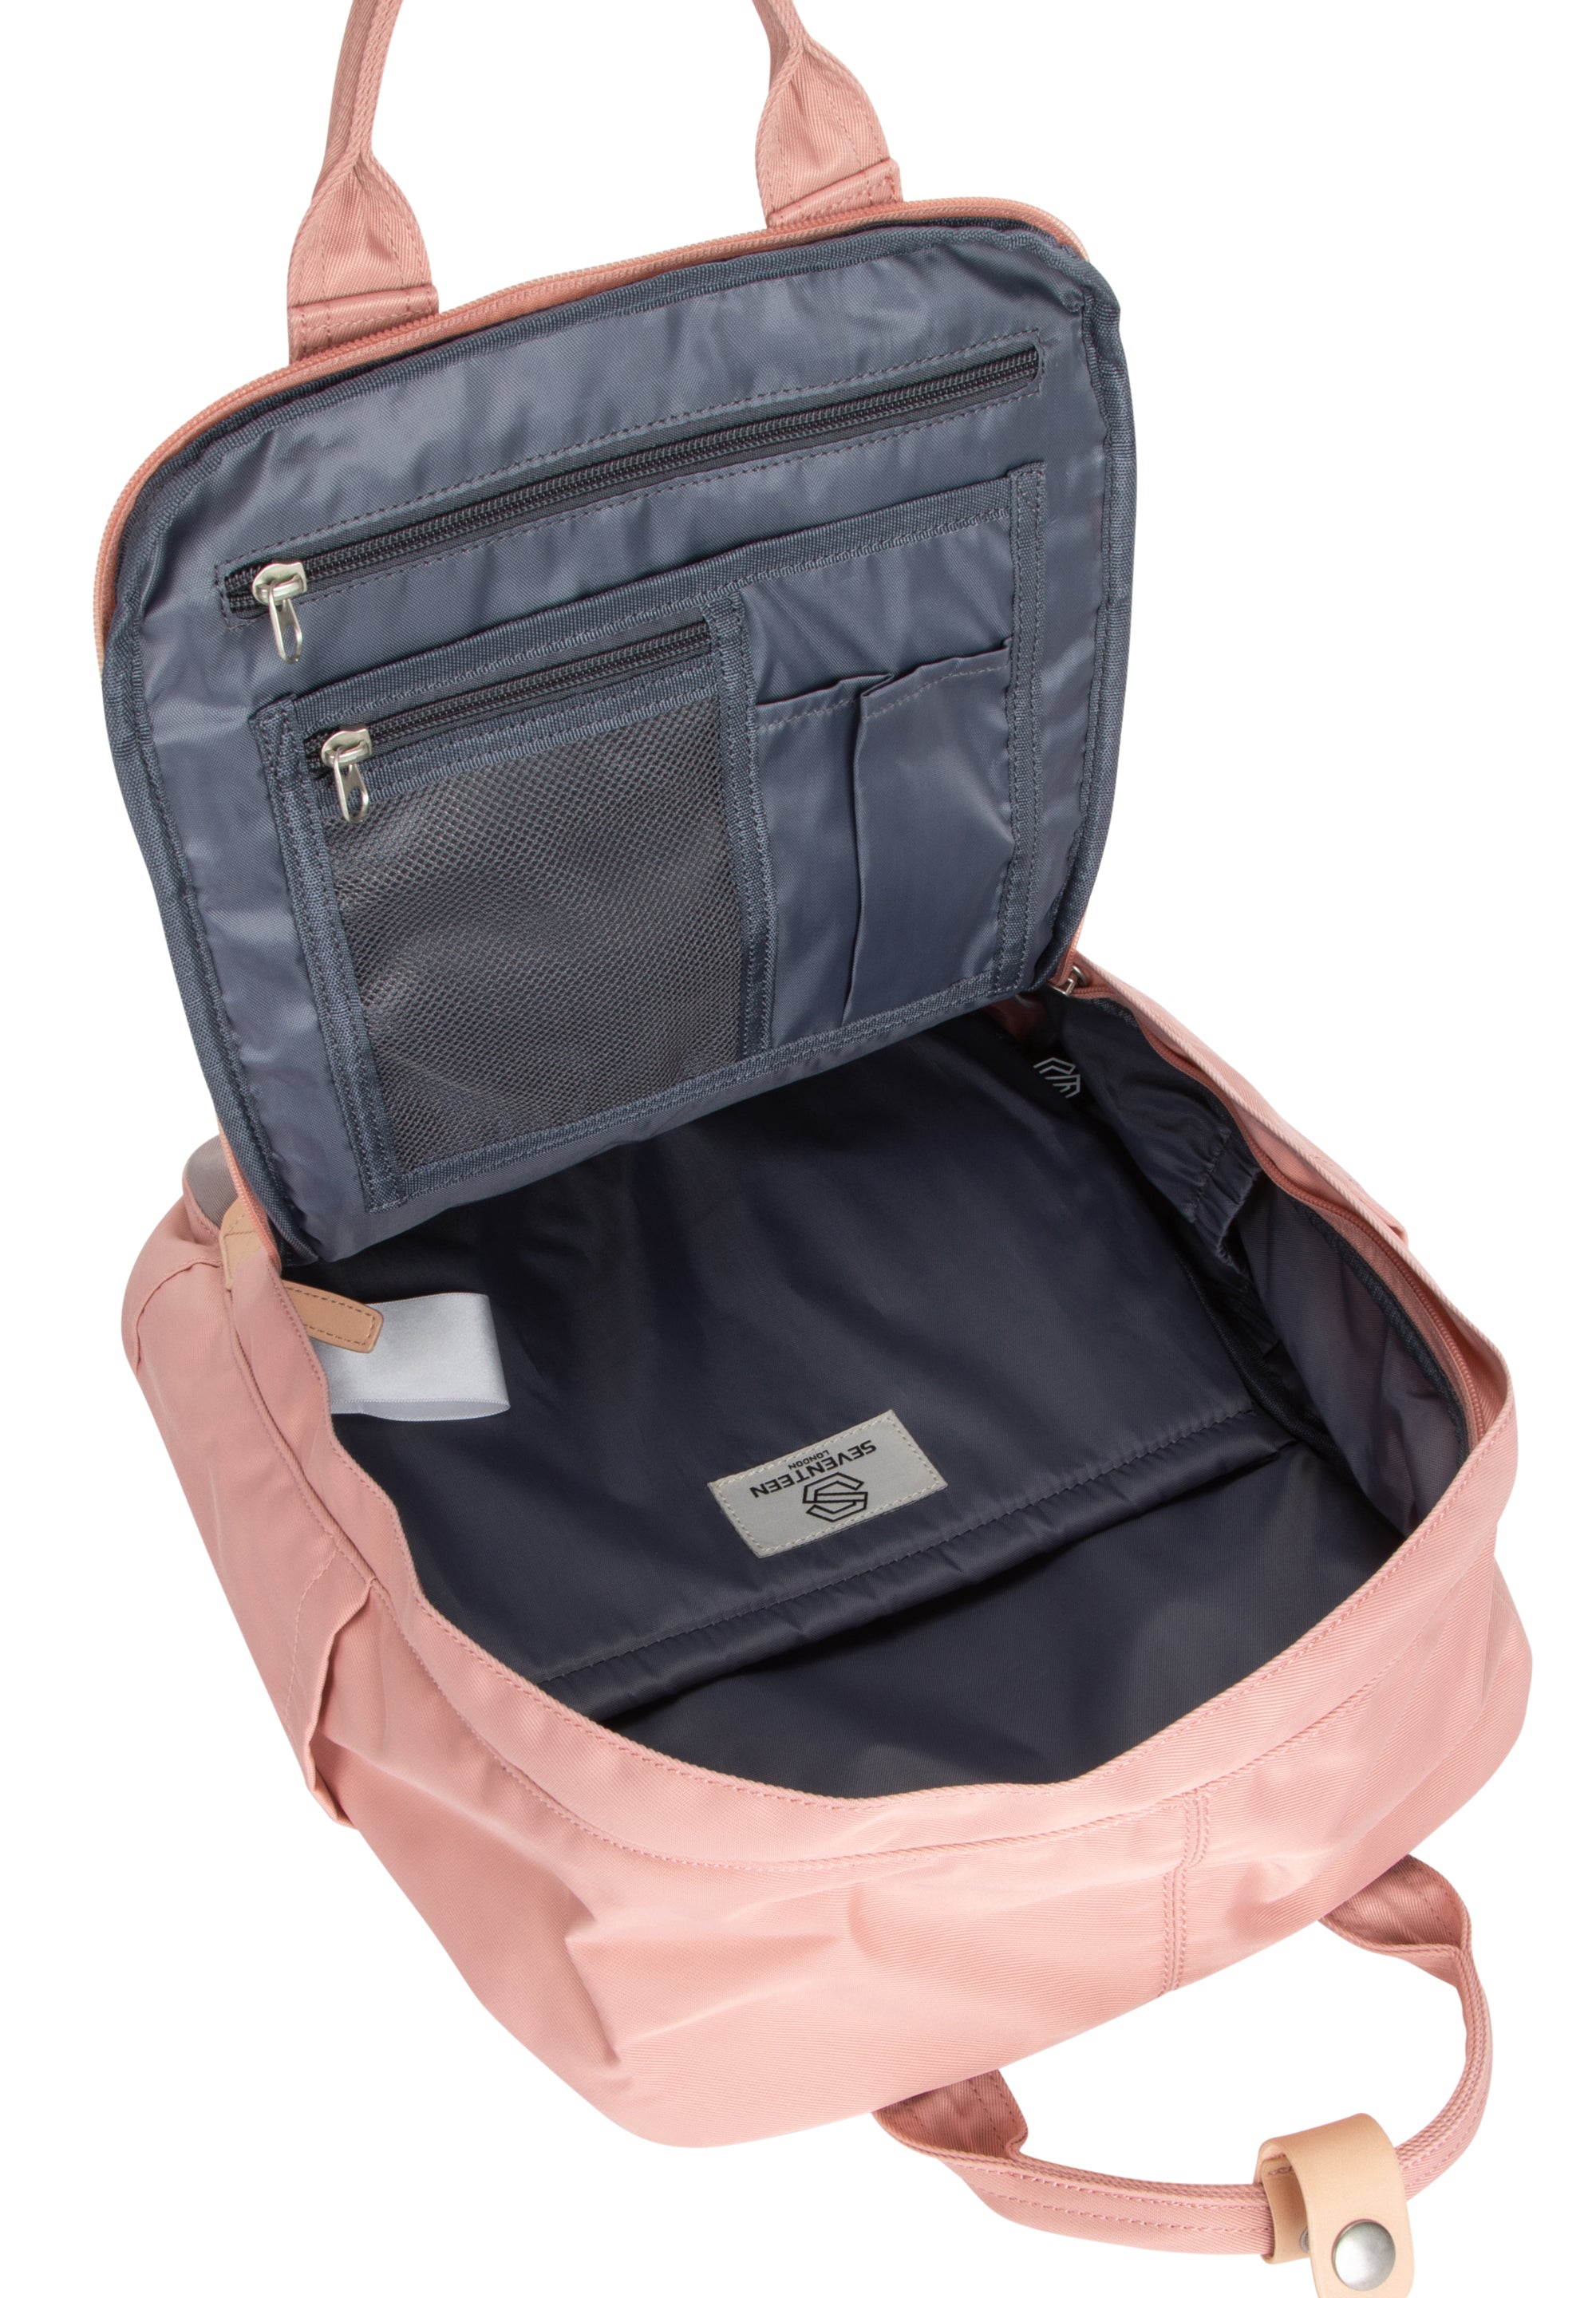 Wimbledon Backpack - Pink with Grey - Seventeen London